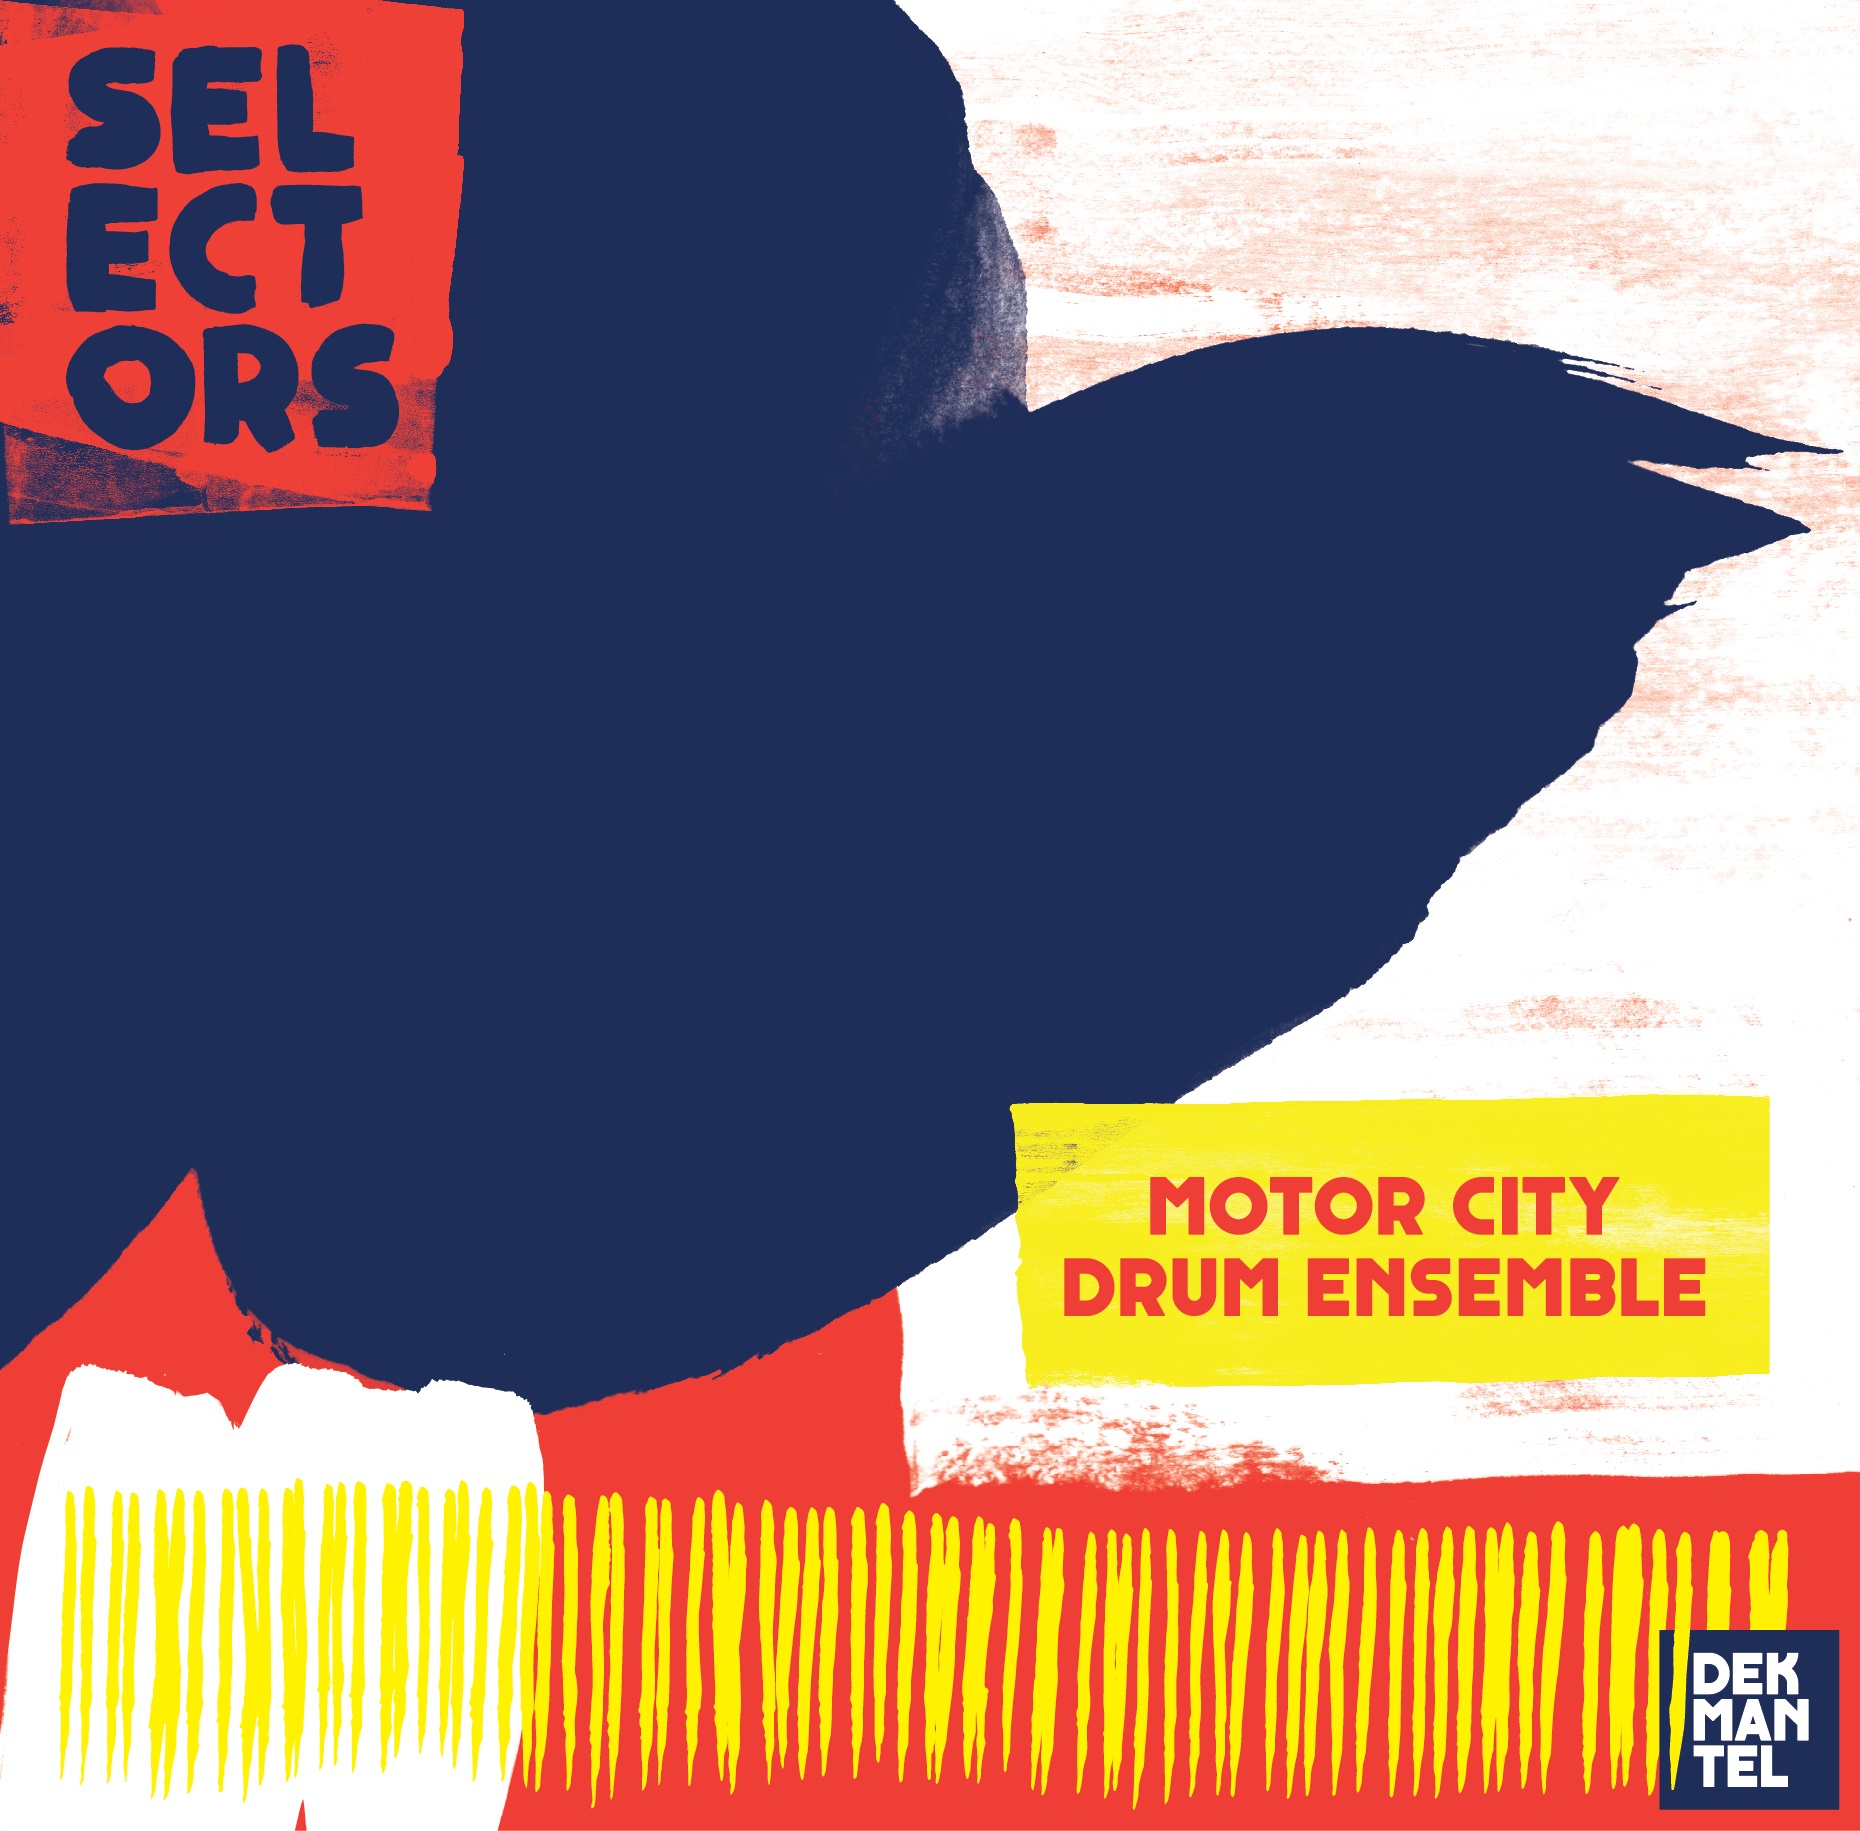 Motor City Drum Ensemble – Selectors 001